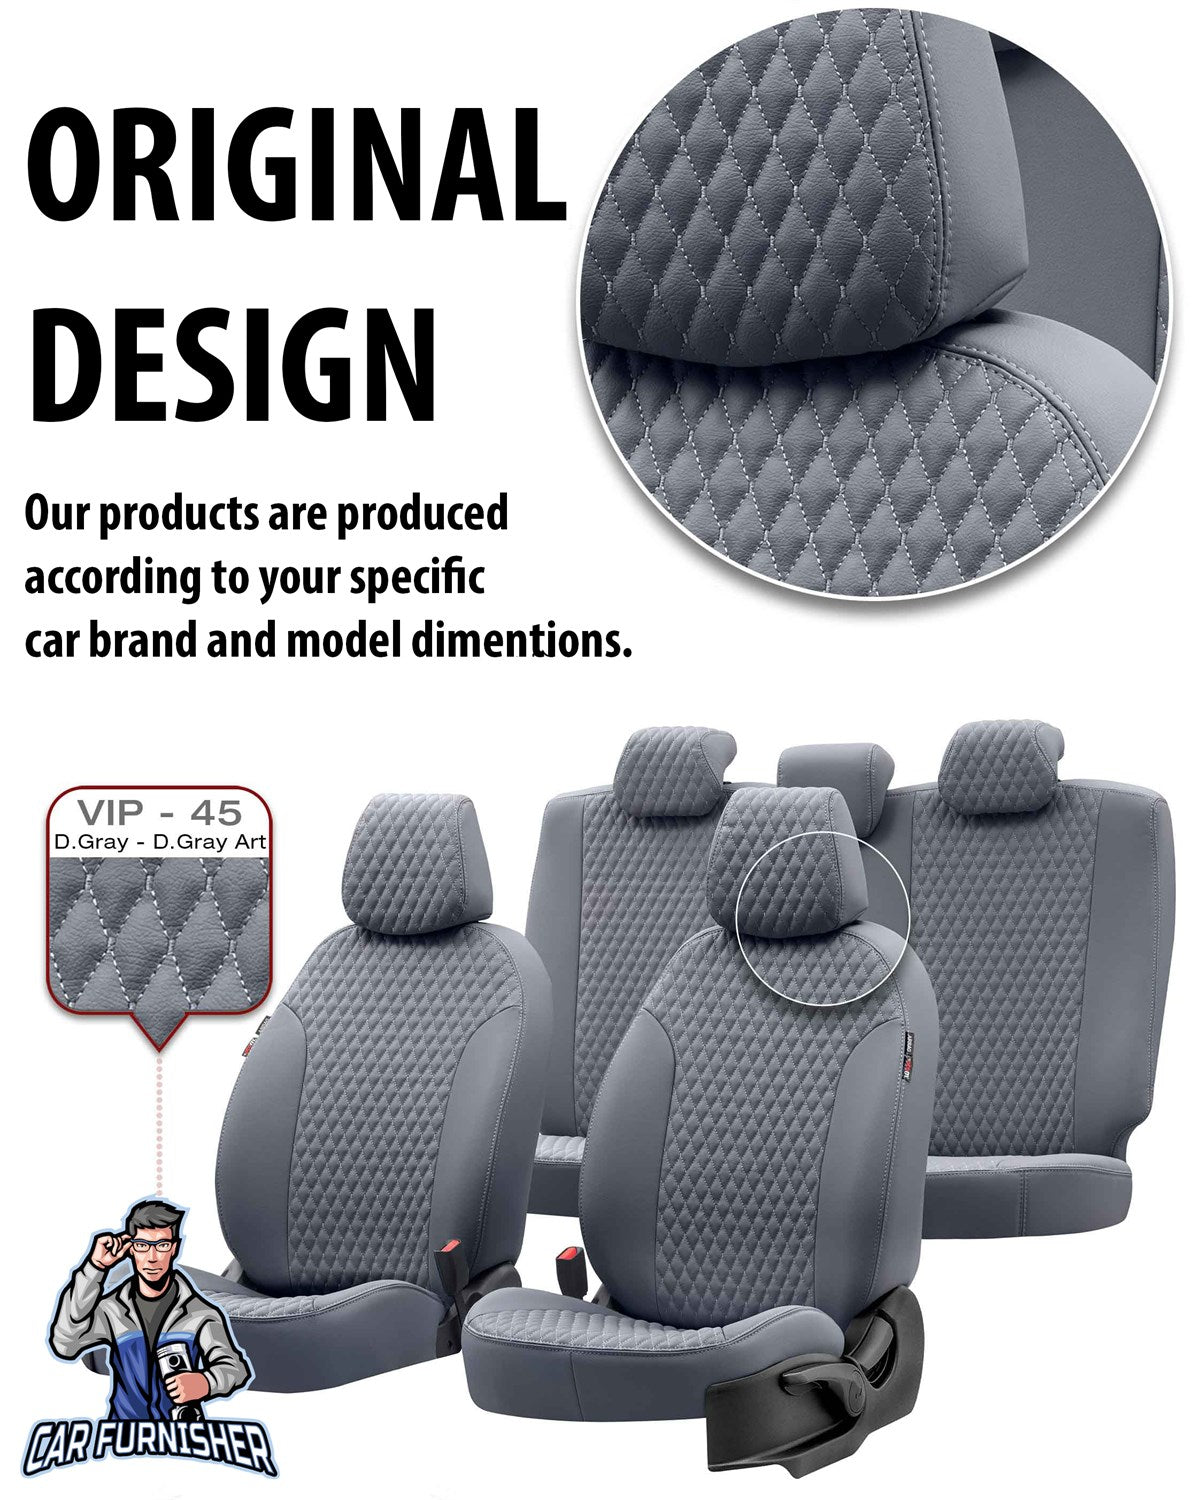 Renault Koleos Seat Covers Amsterdam Leather Design Beige Leather